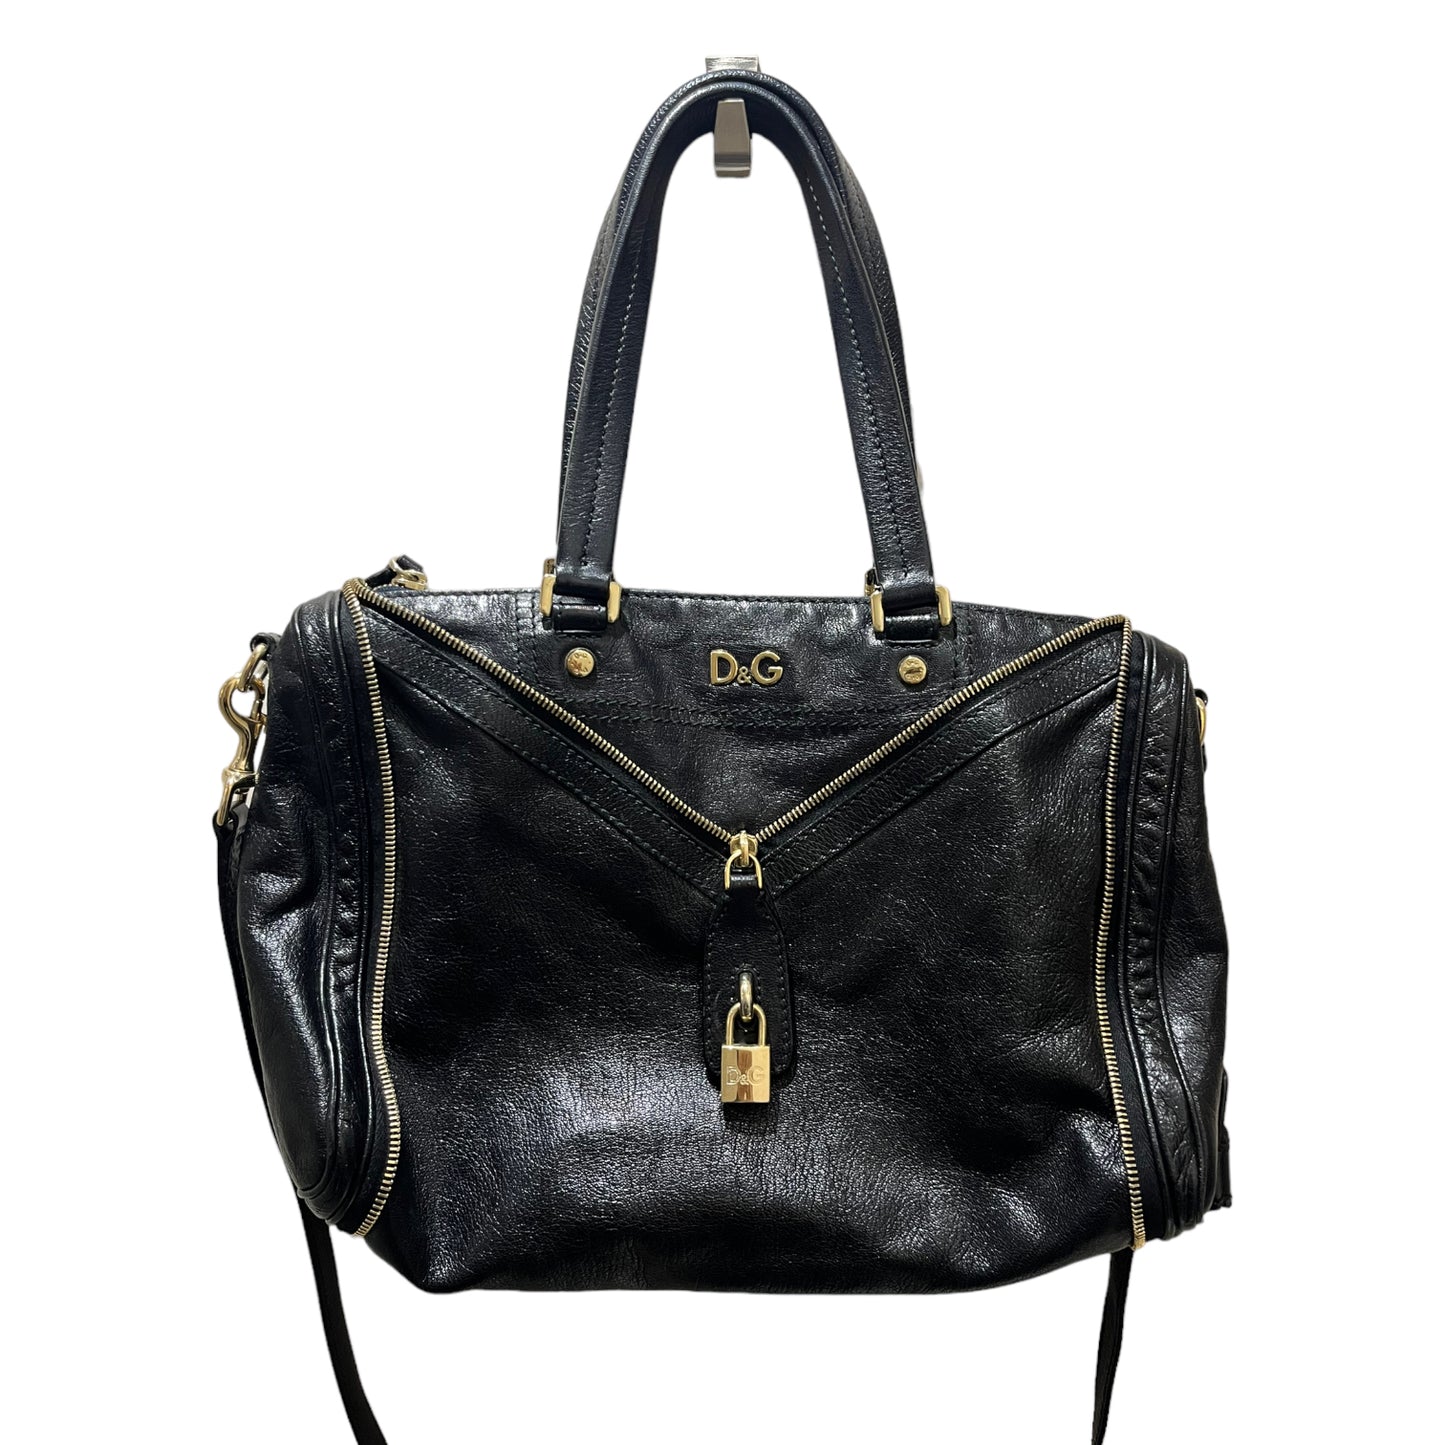 D & G Black Bag